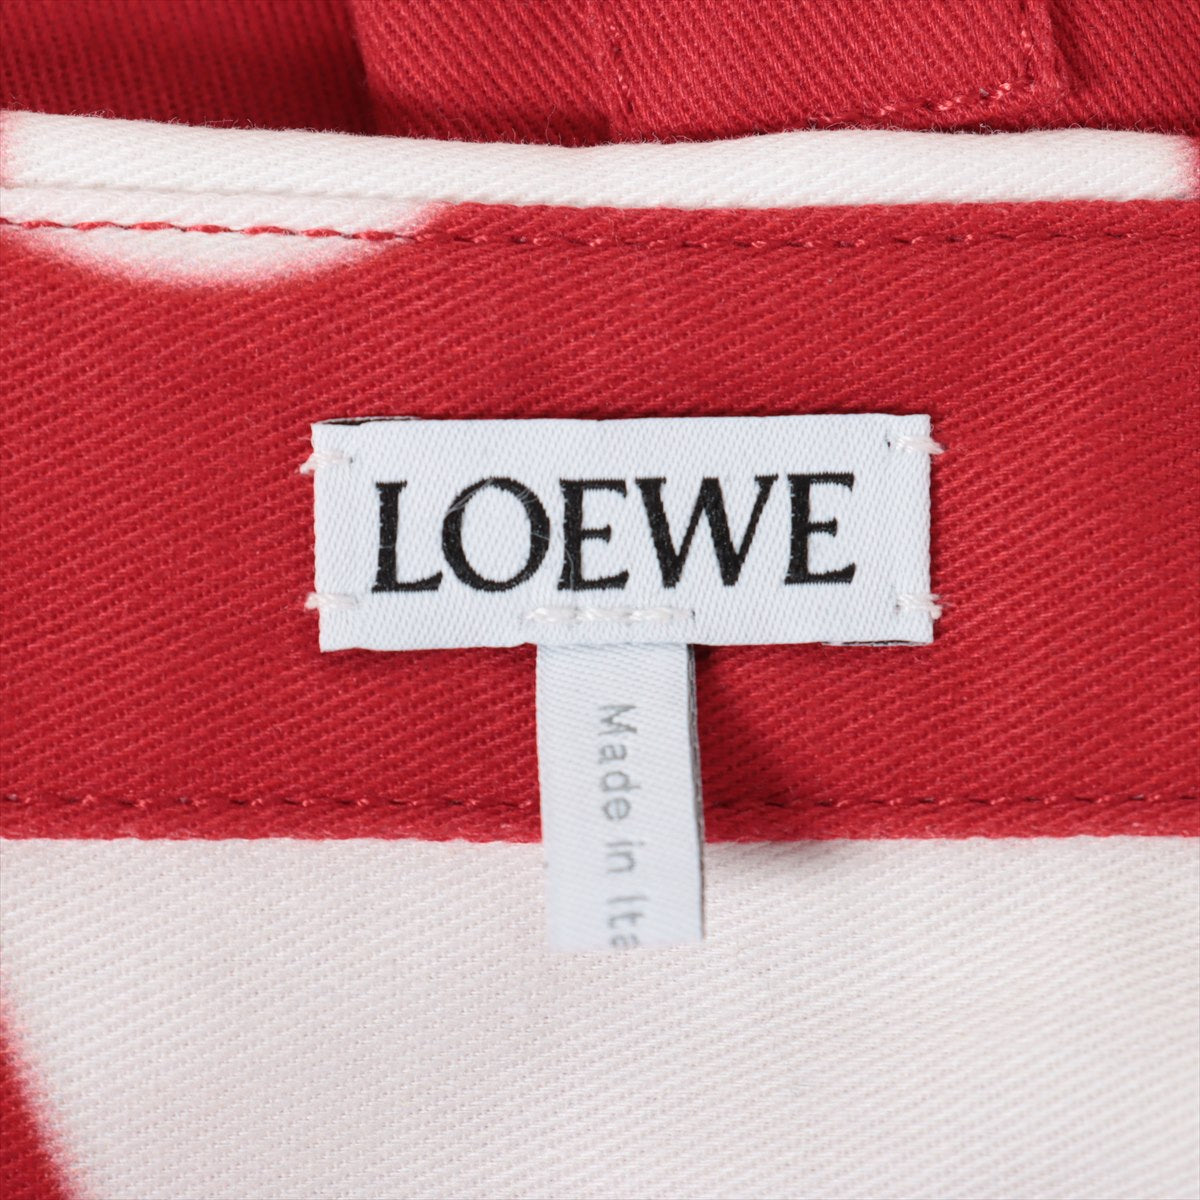 Loewe Anagram Cotton Shirt 44 Men's Red x white